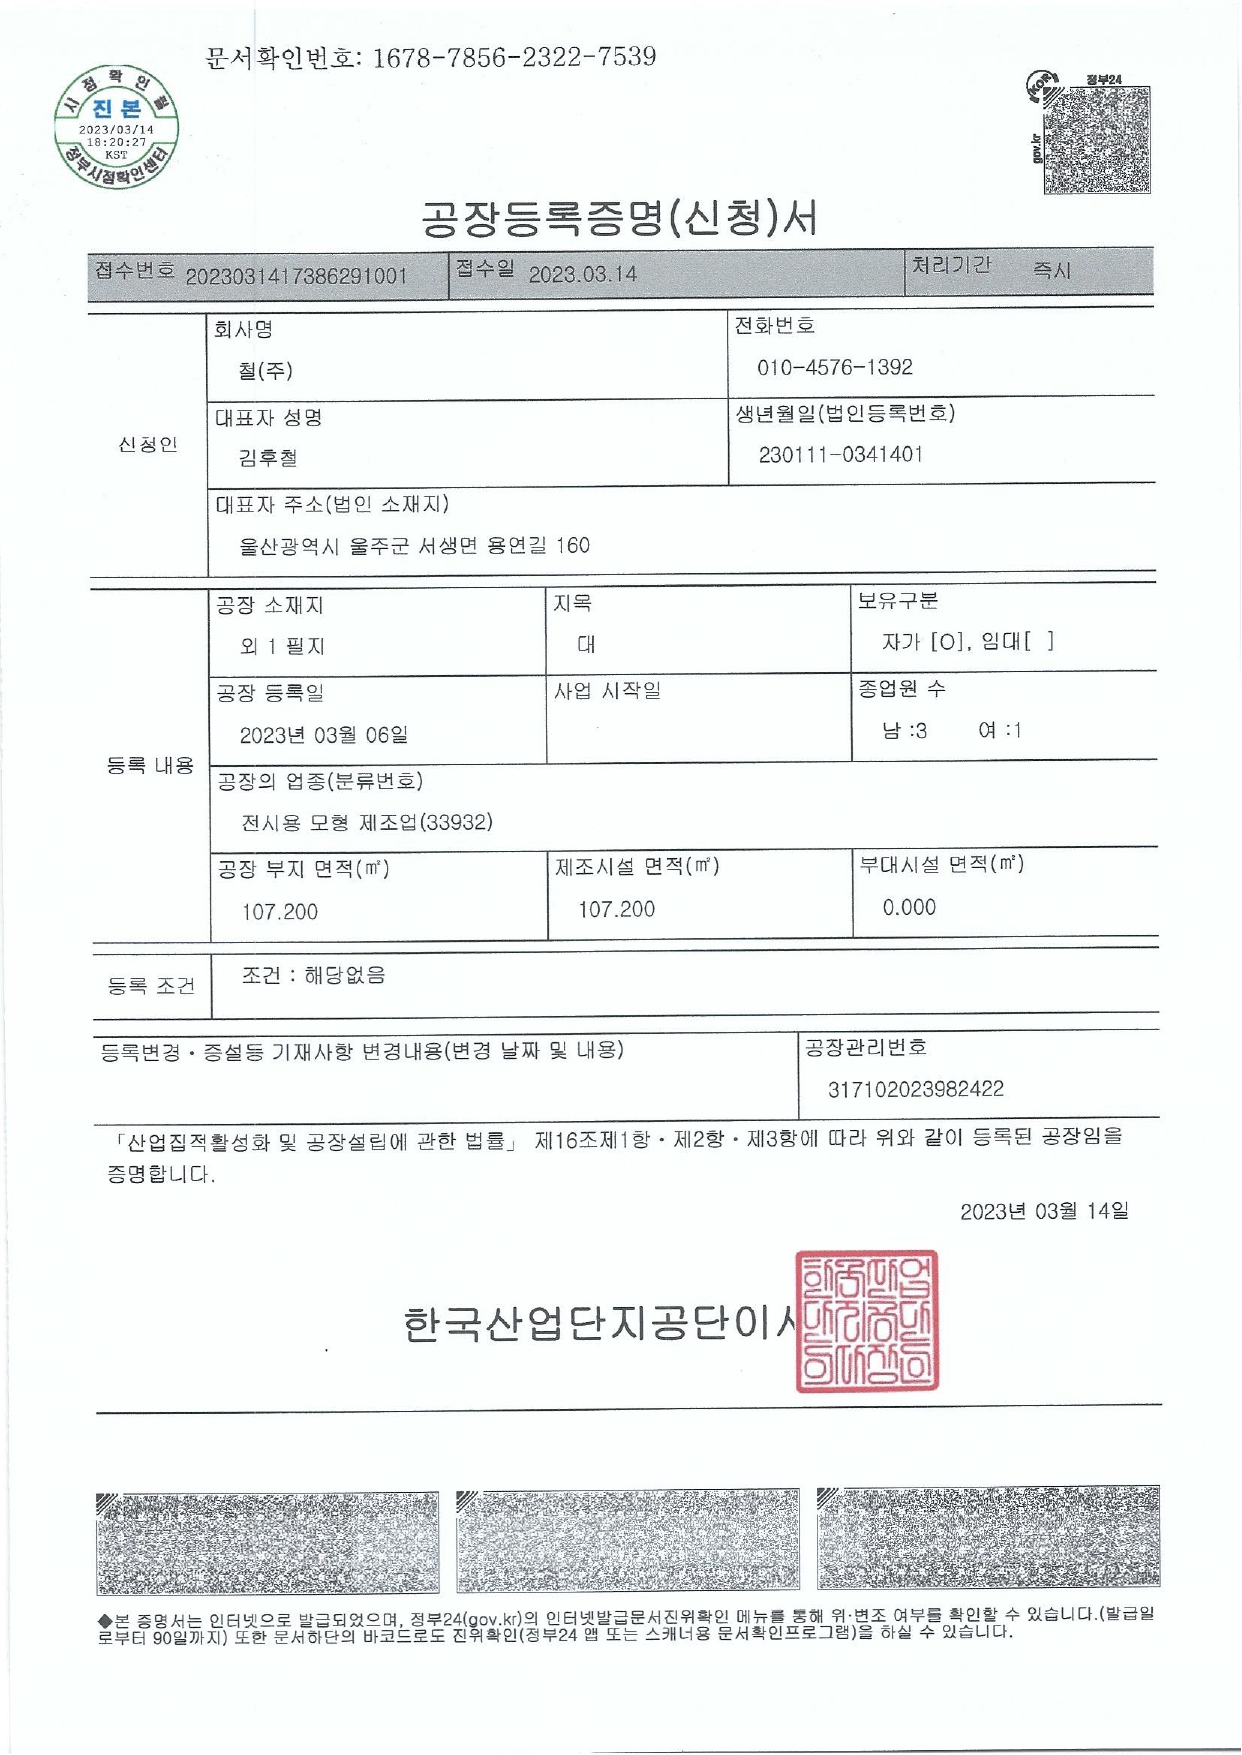 Factory registration certificate